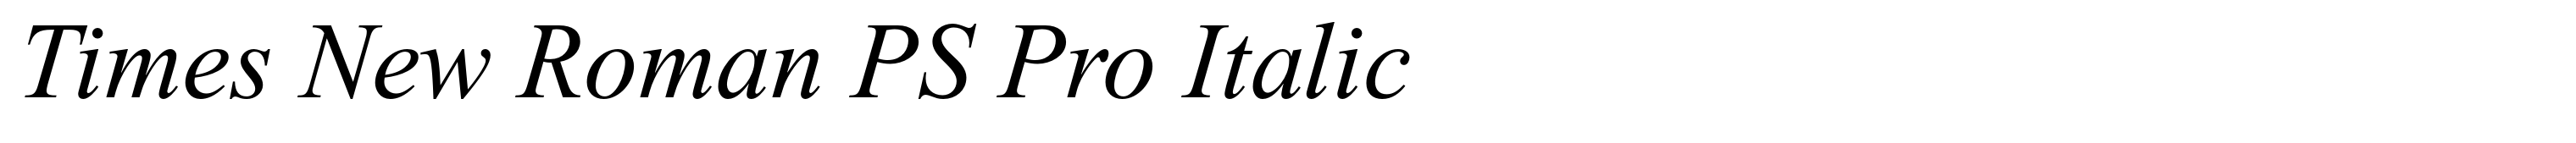 Times New Roman PS Pro Italic